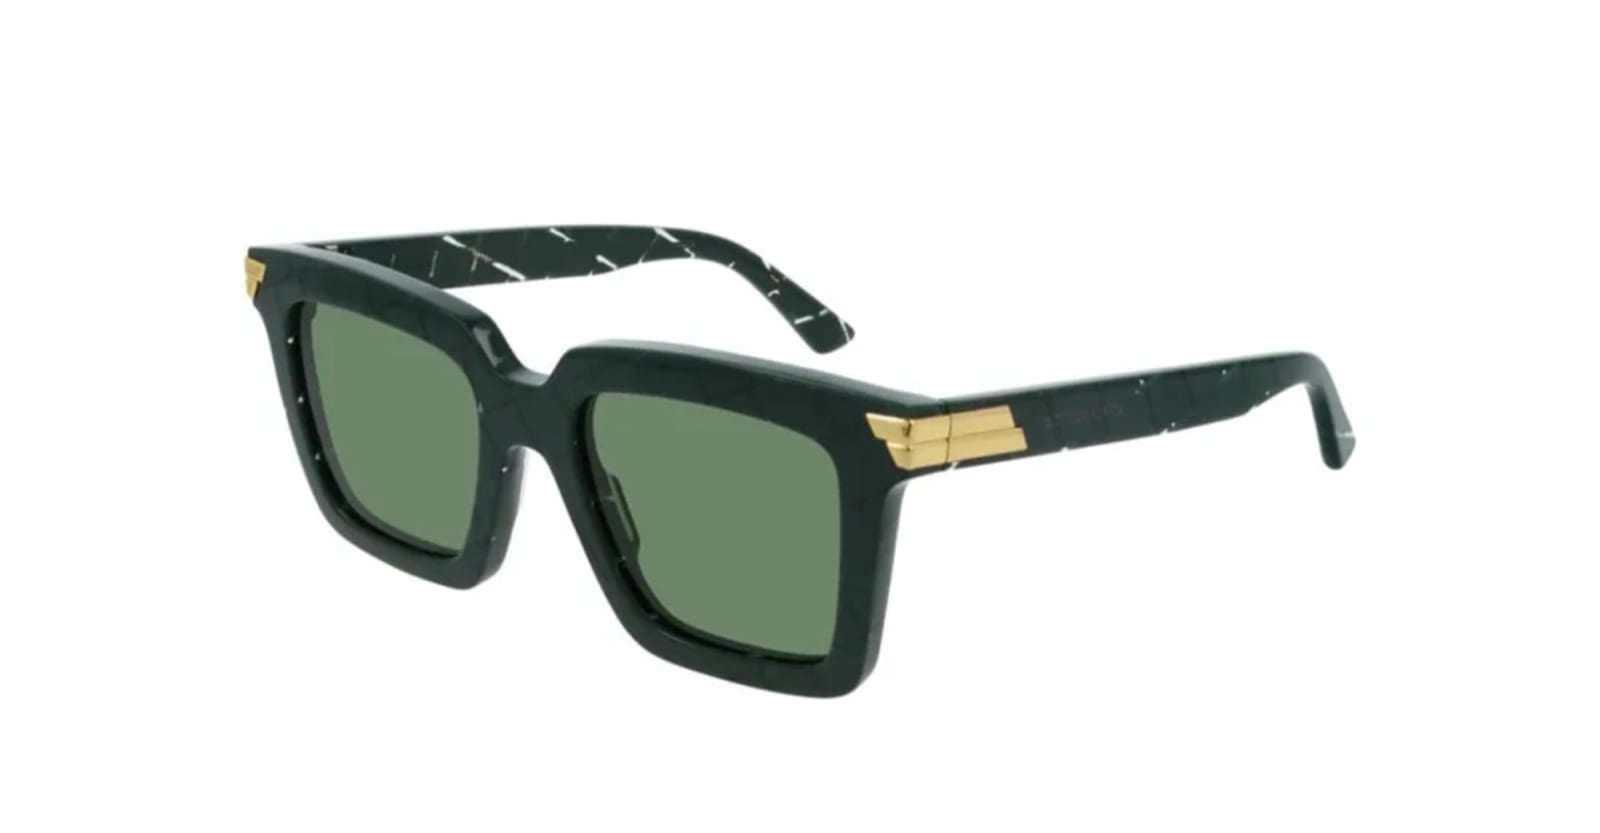 Bottega Veneta Eyewear Bv1005s-008 - intreccio Green Sunglasses